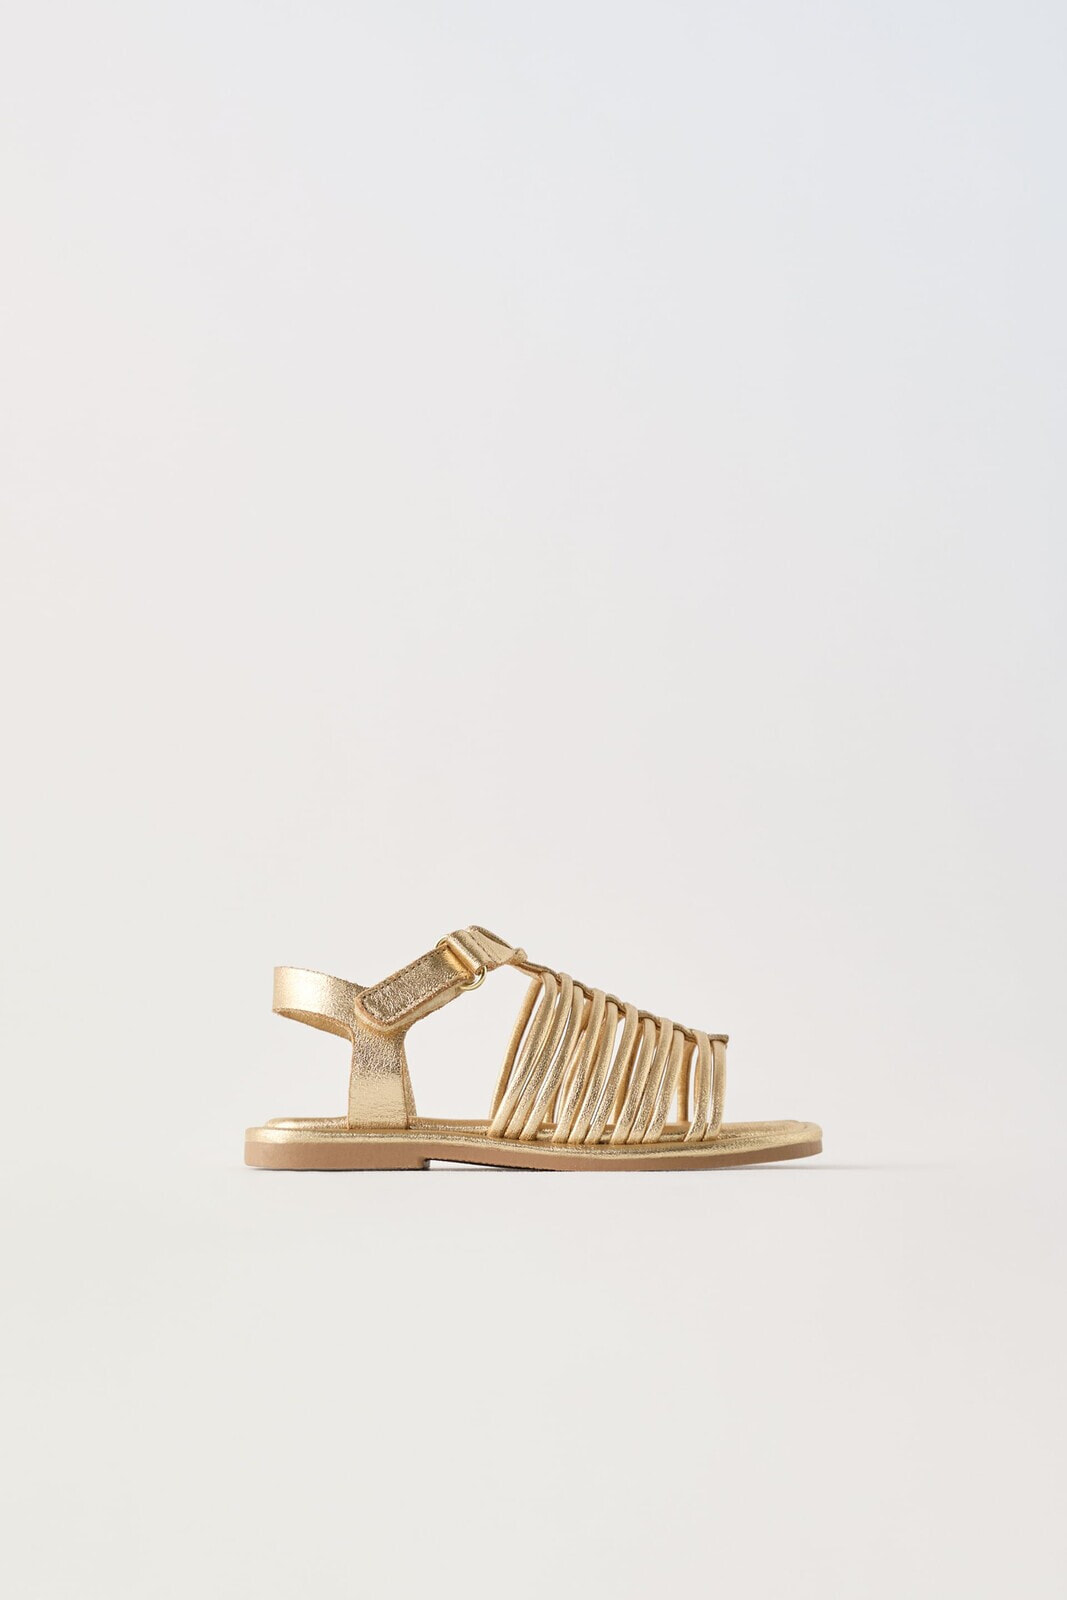 Metallic sandals with straps